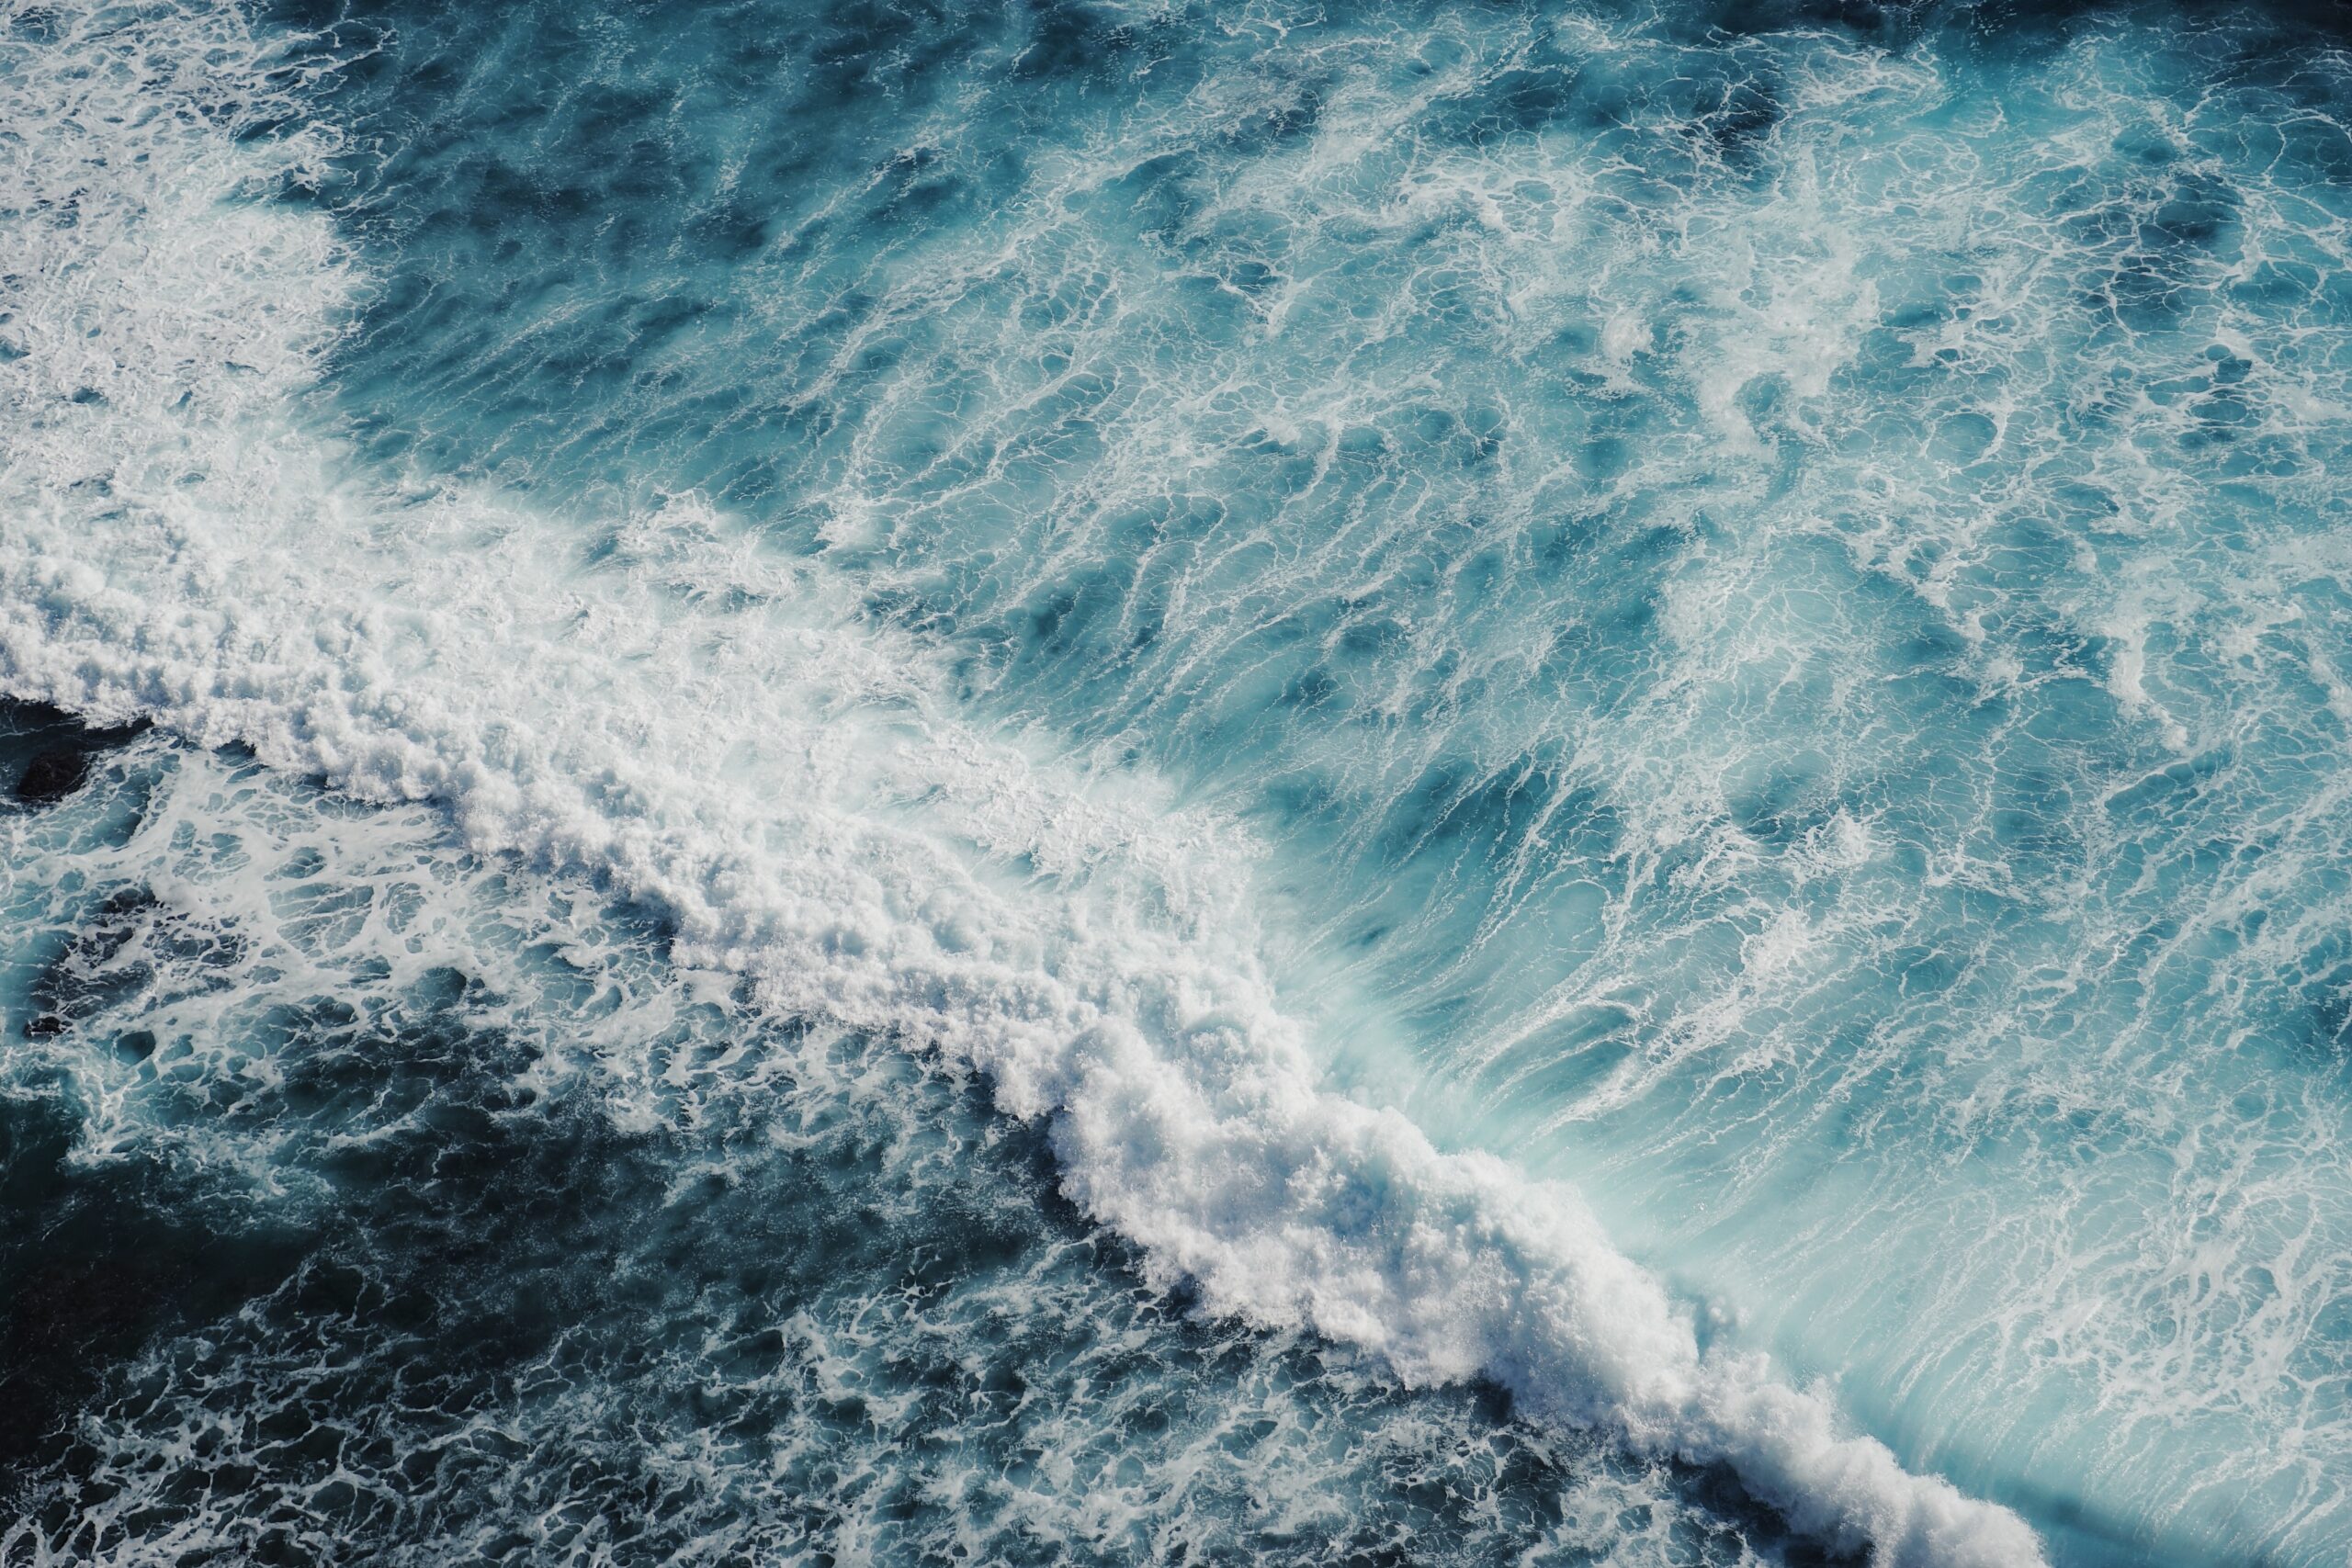 Photo of waves crashing by Andrzej Kryszpiniuk